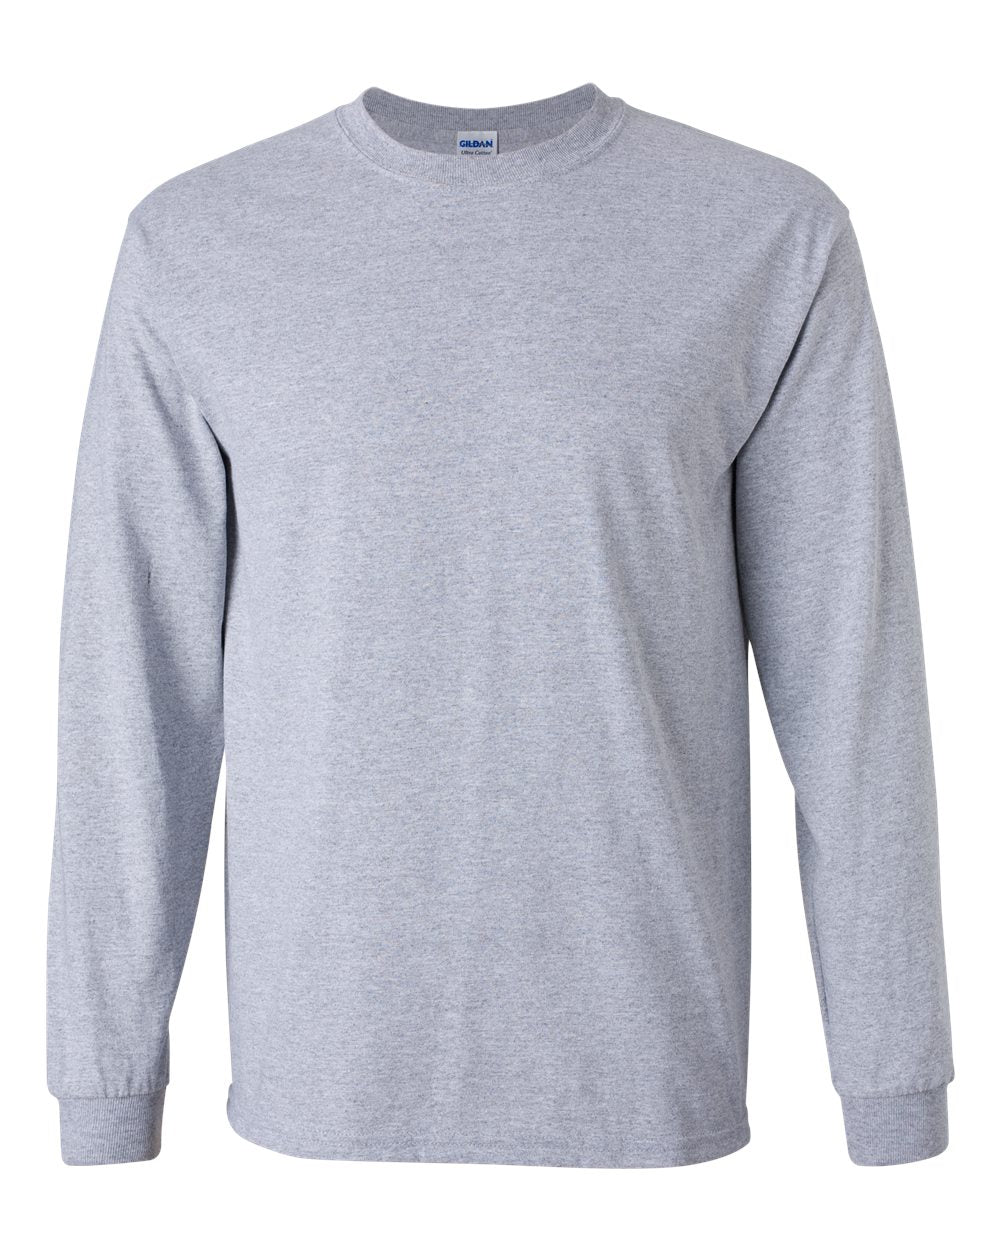 Unisex Long Sleeve T-Shirt | Twirl